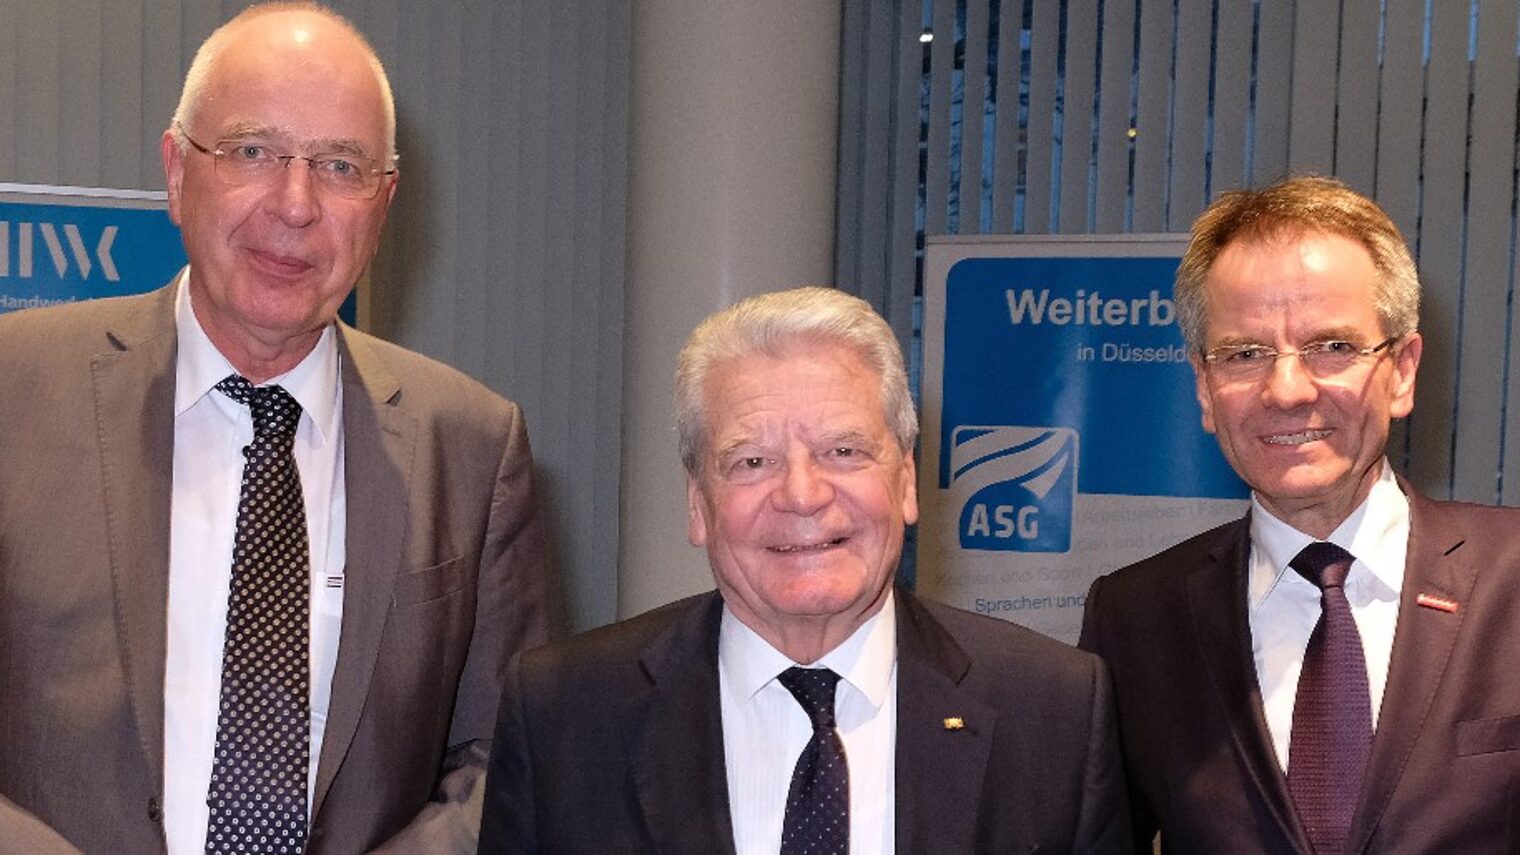 (v. l.): Dr. Leidinger, Vorsitzender des Verwaltungsrats der ASG, Bundespräsident a. D. Dr. Gauck und Kammerpräsident Ehlert